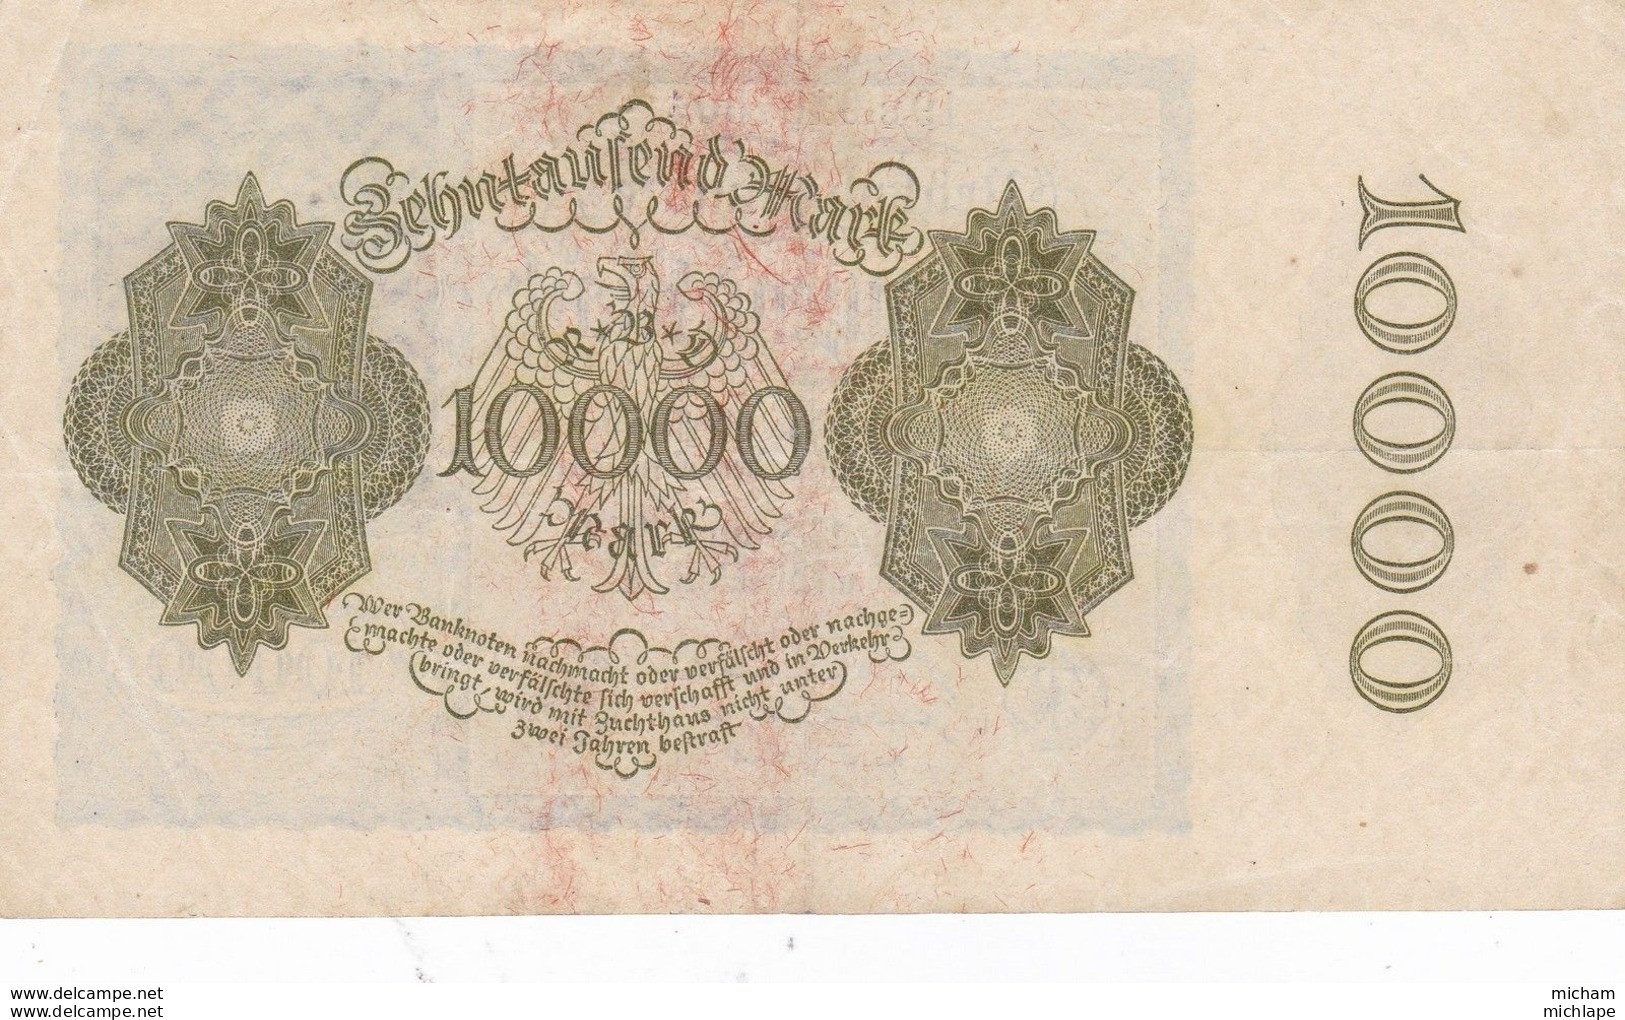 Allemagne 10000  Marks  1922  Ce Billet A Circulé - A Identifier